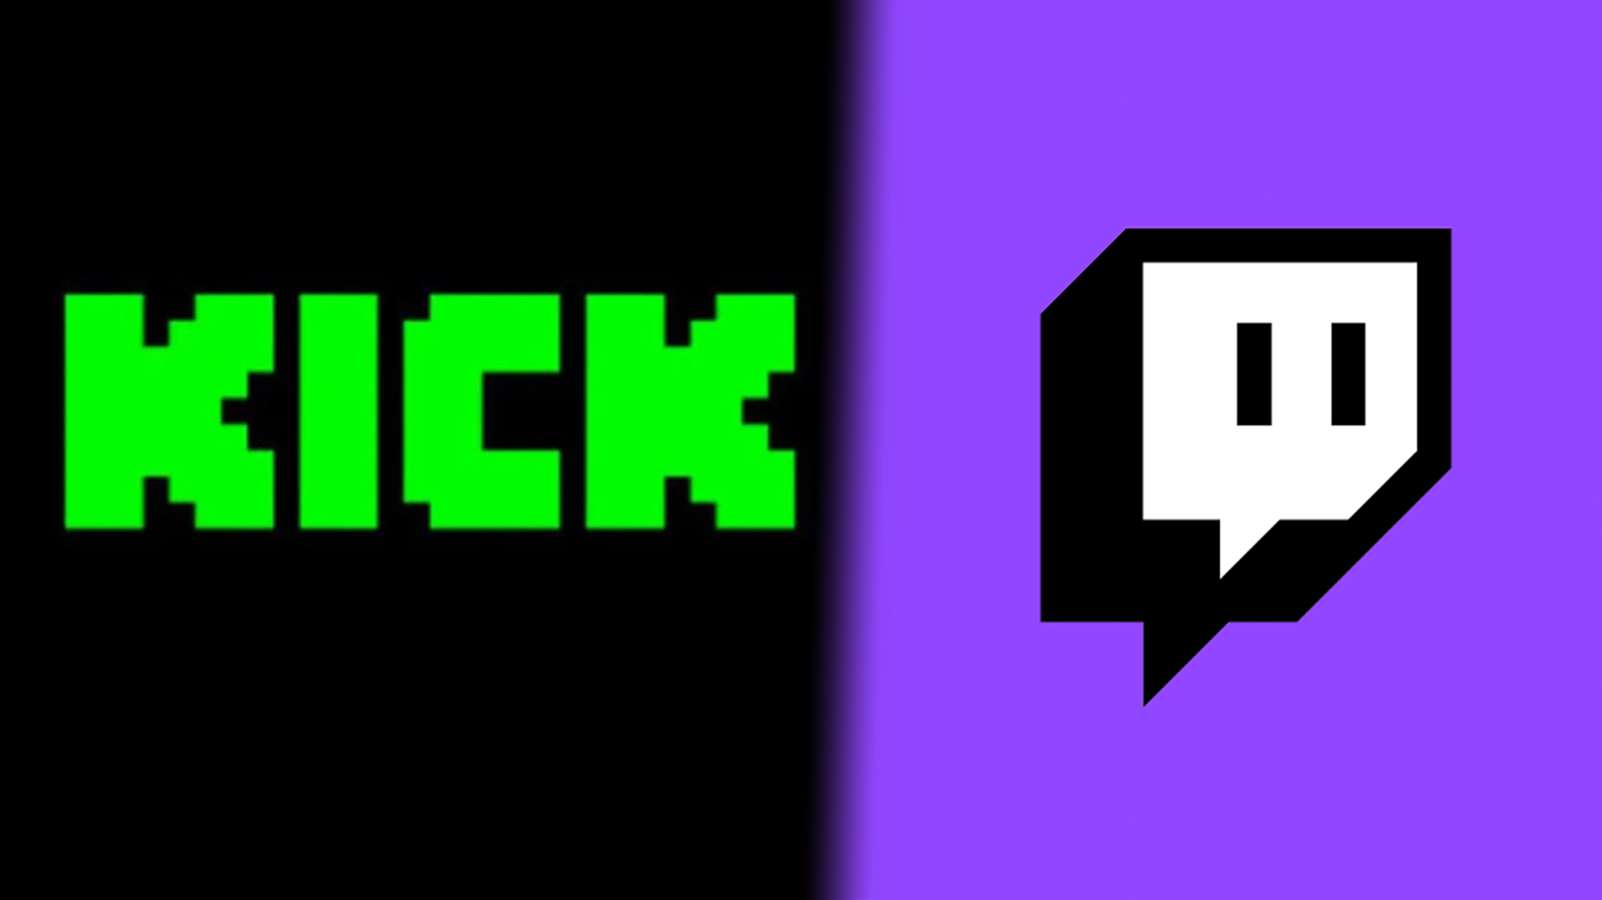 Kick logo next to Twitch logo